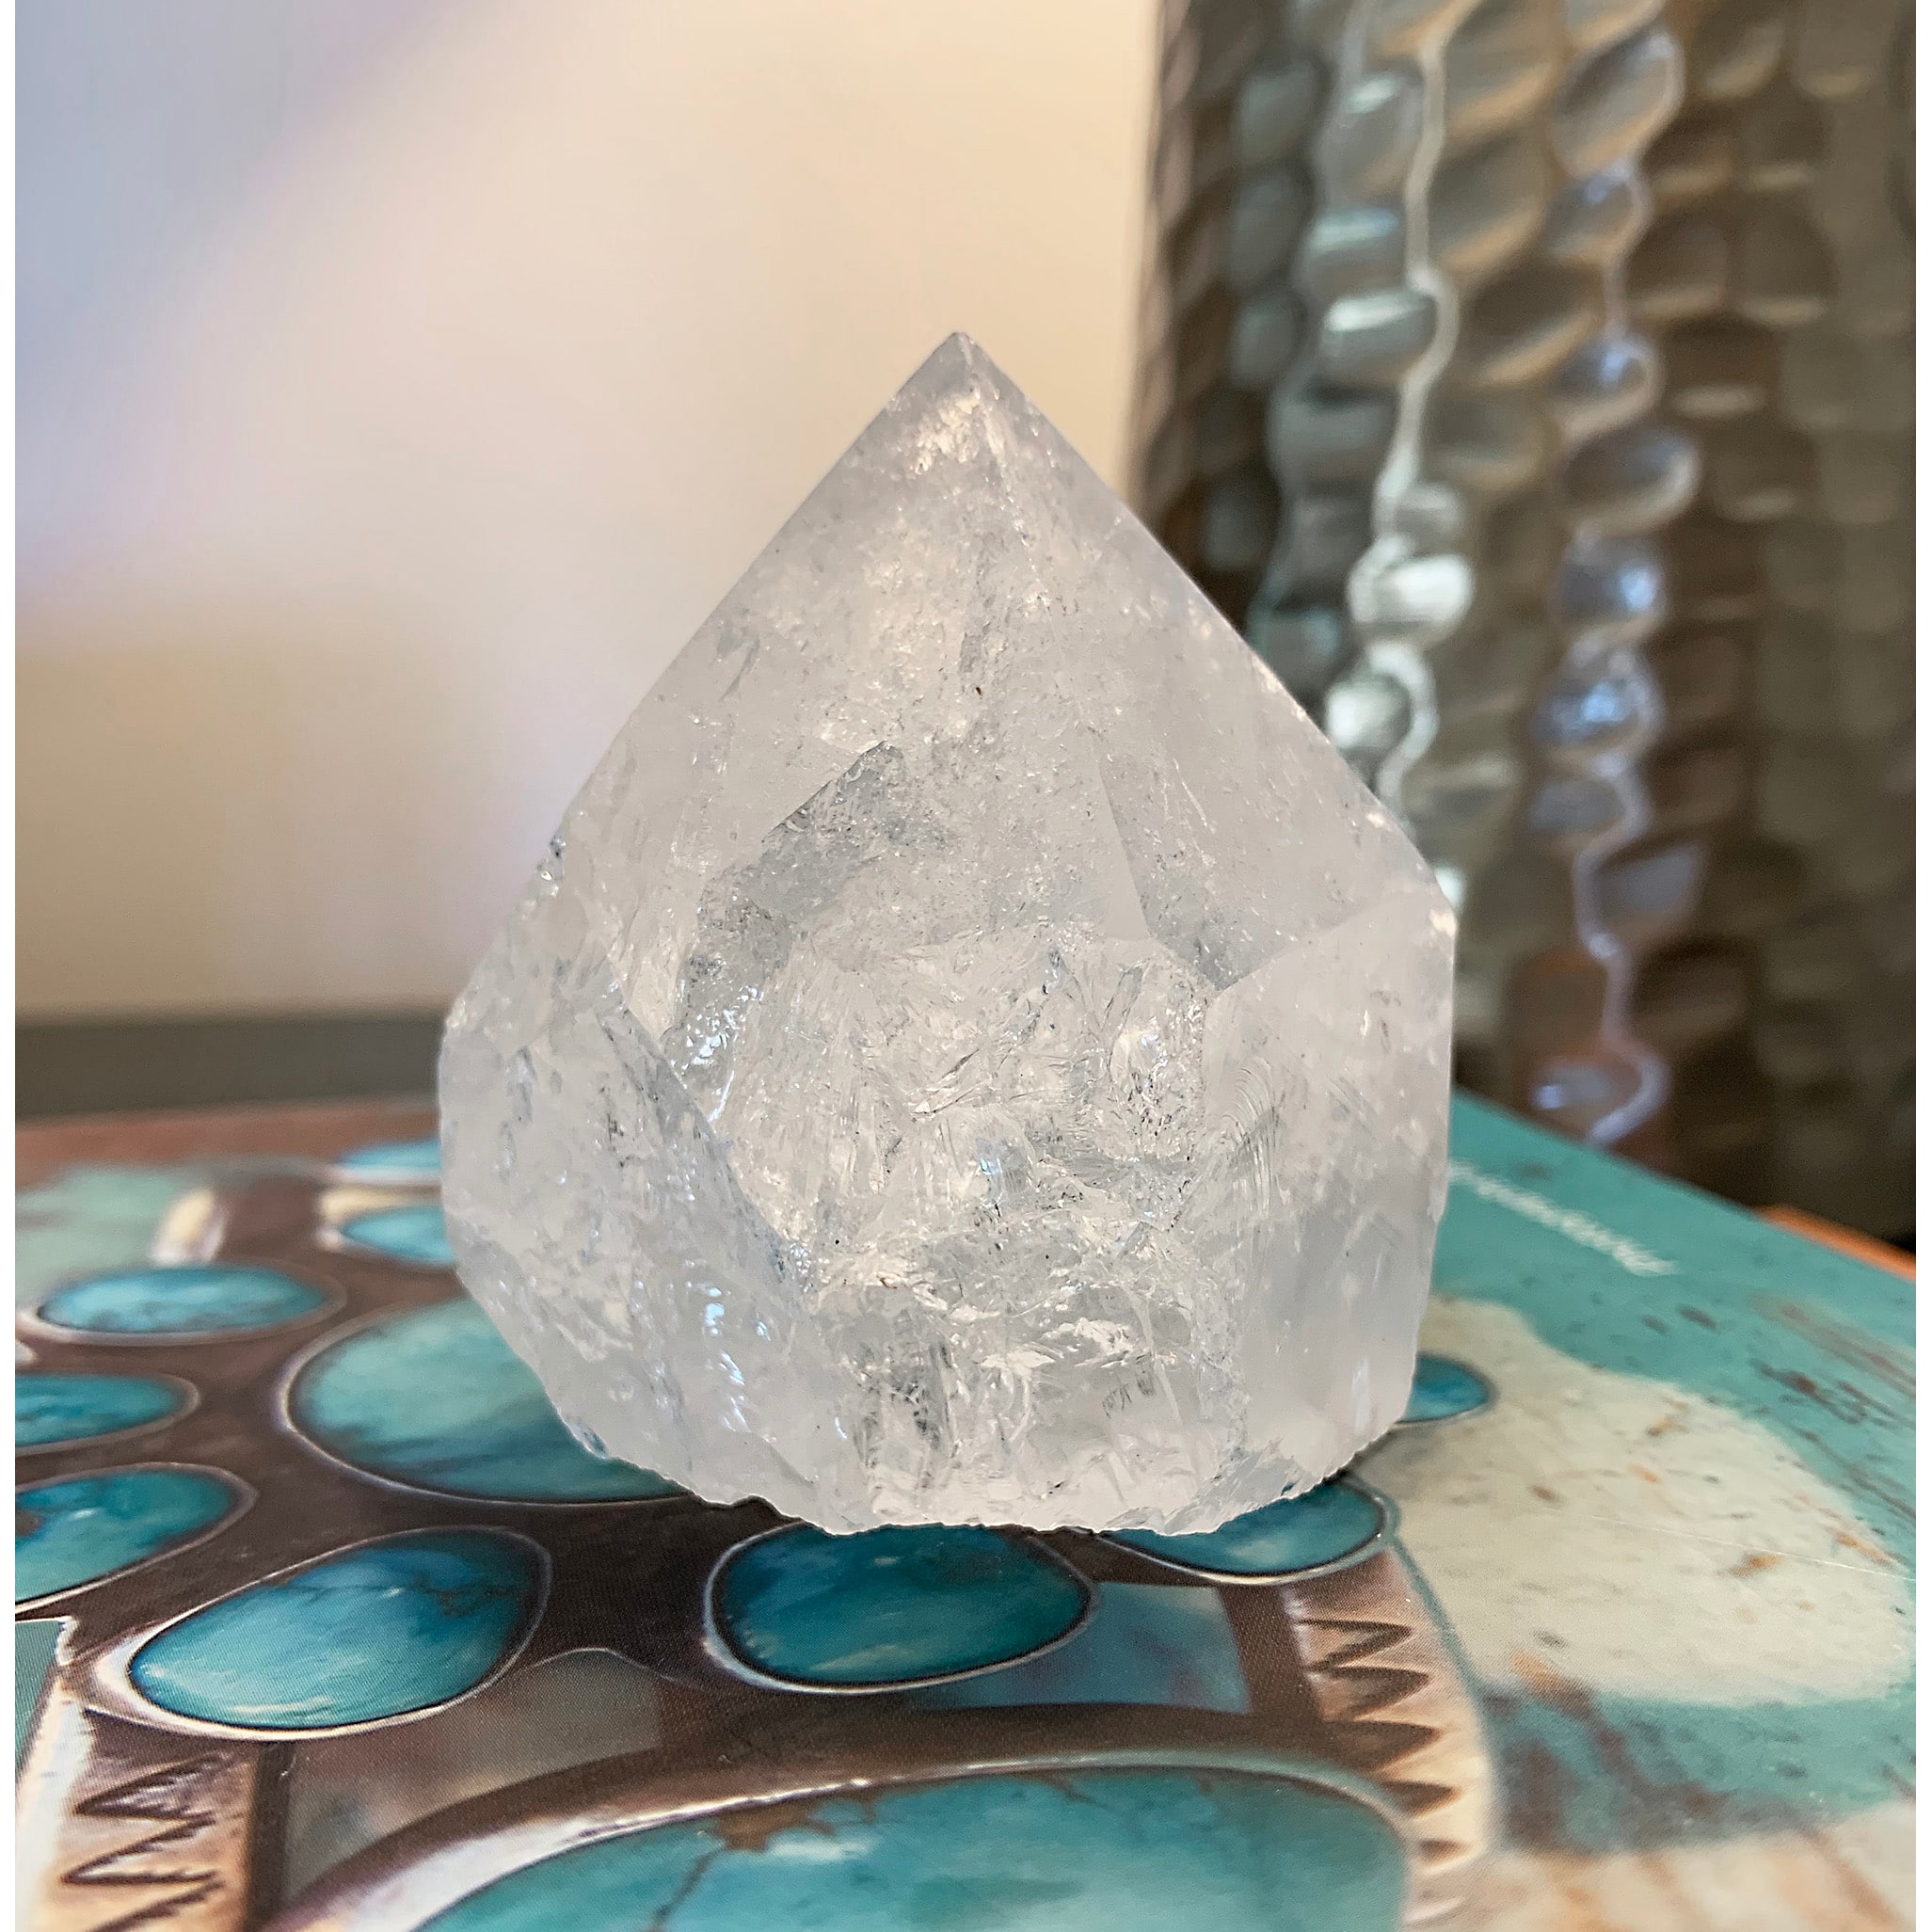 Crystal Quartz Point - Semi Polished